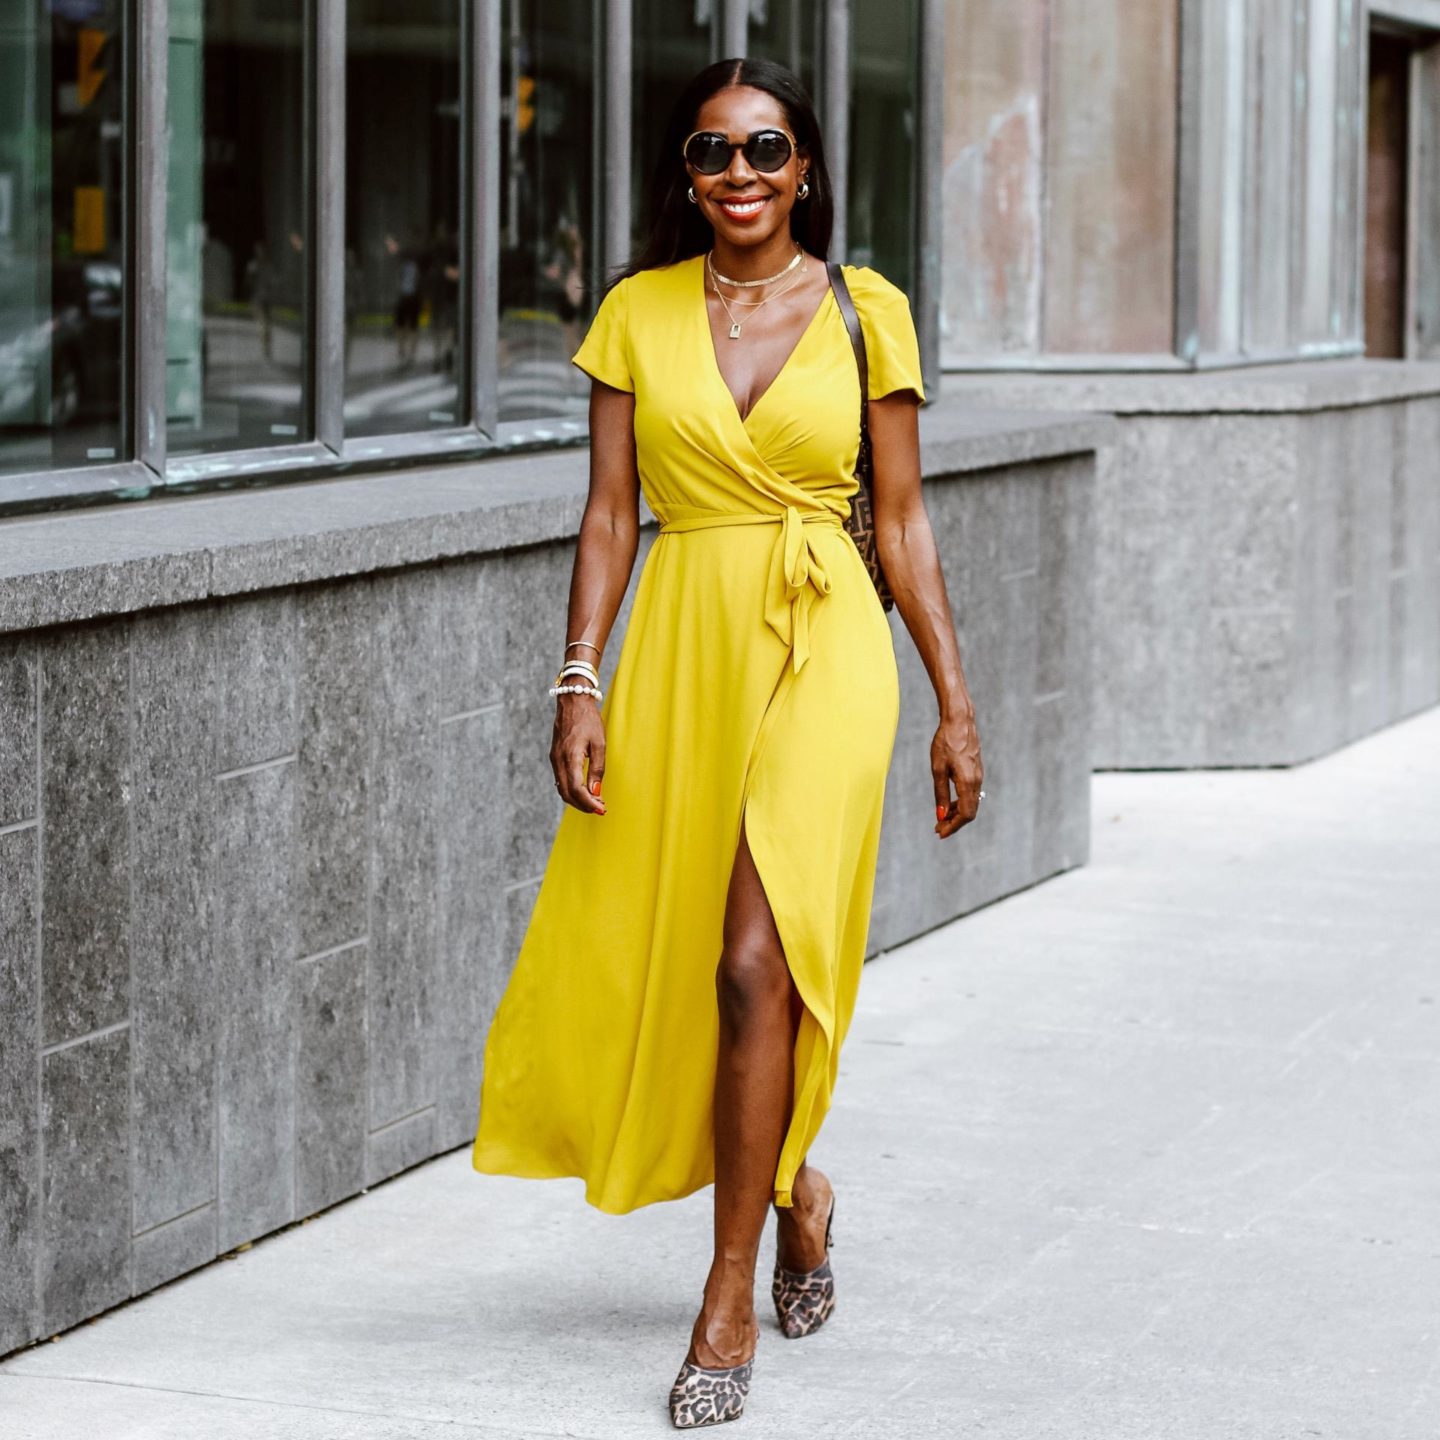 Dominique Baker Wearing a Yellow Dress walking through Ottawa